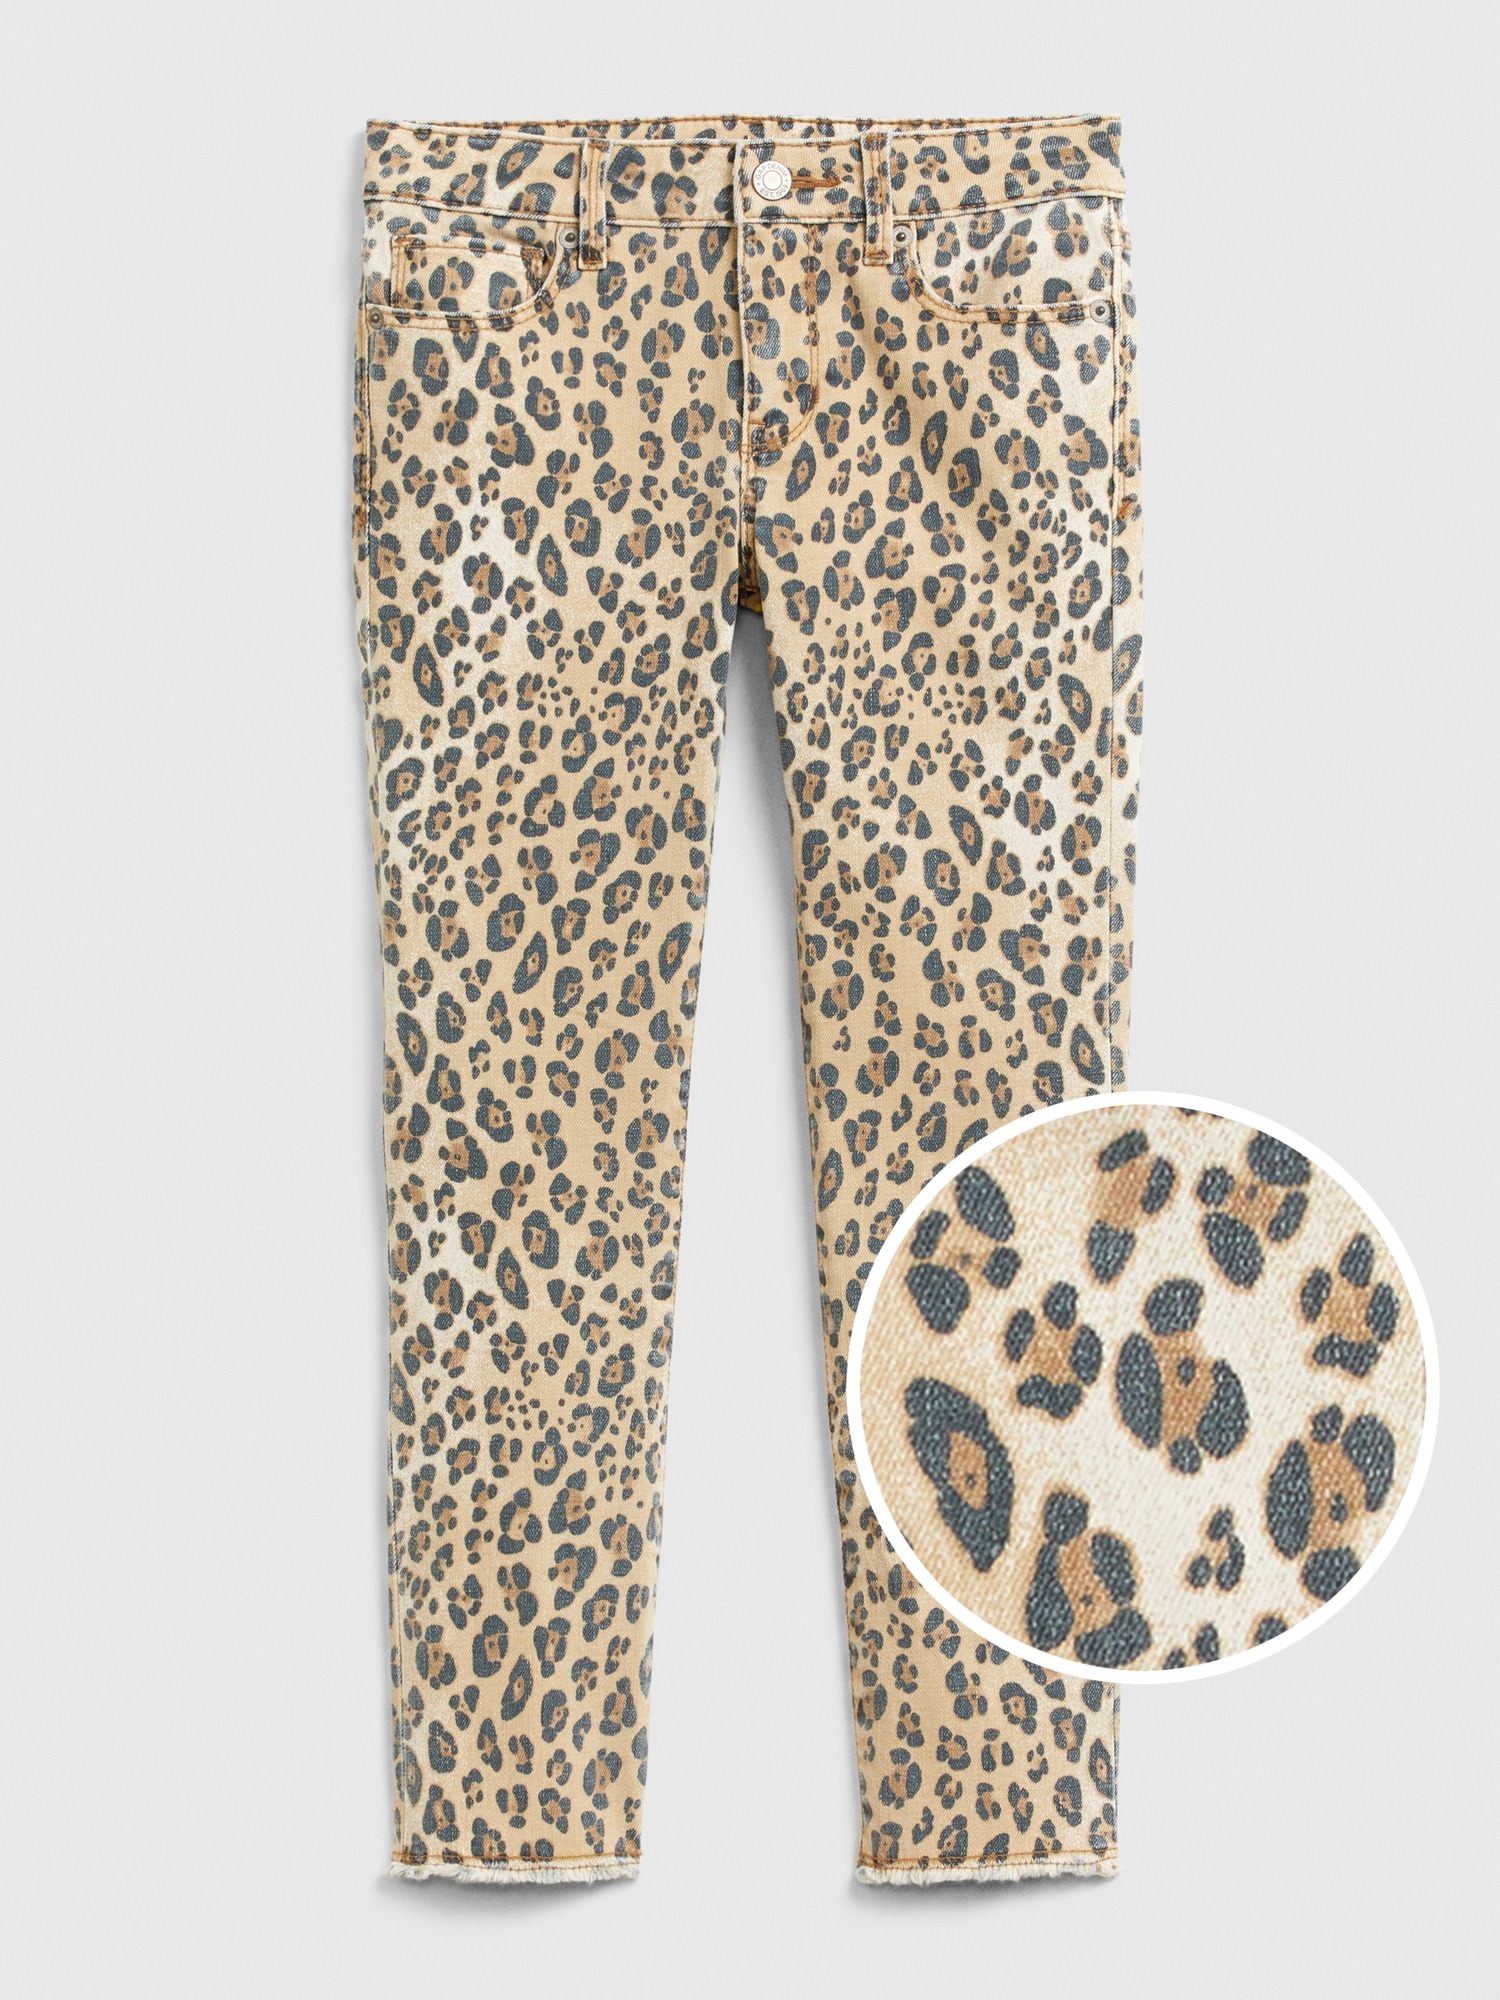 gap leopard jeans